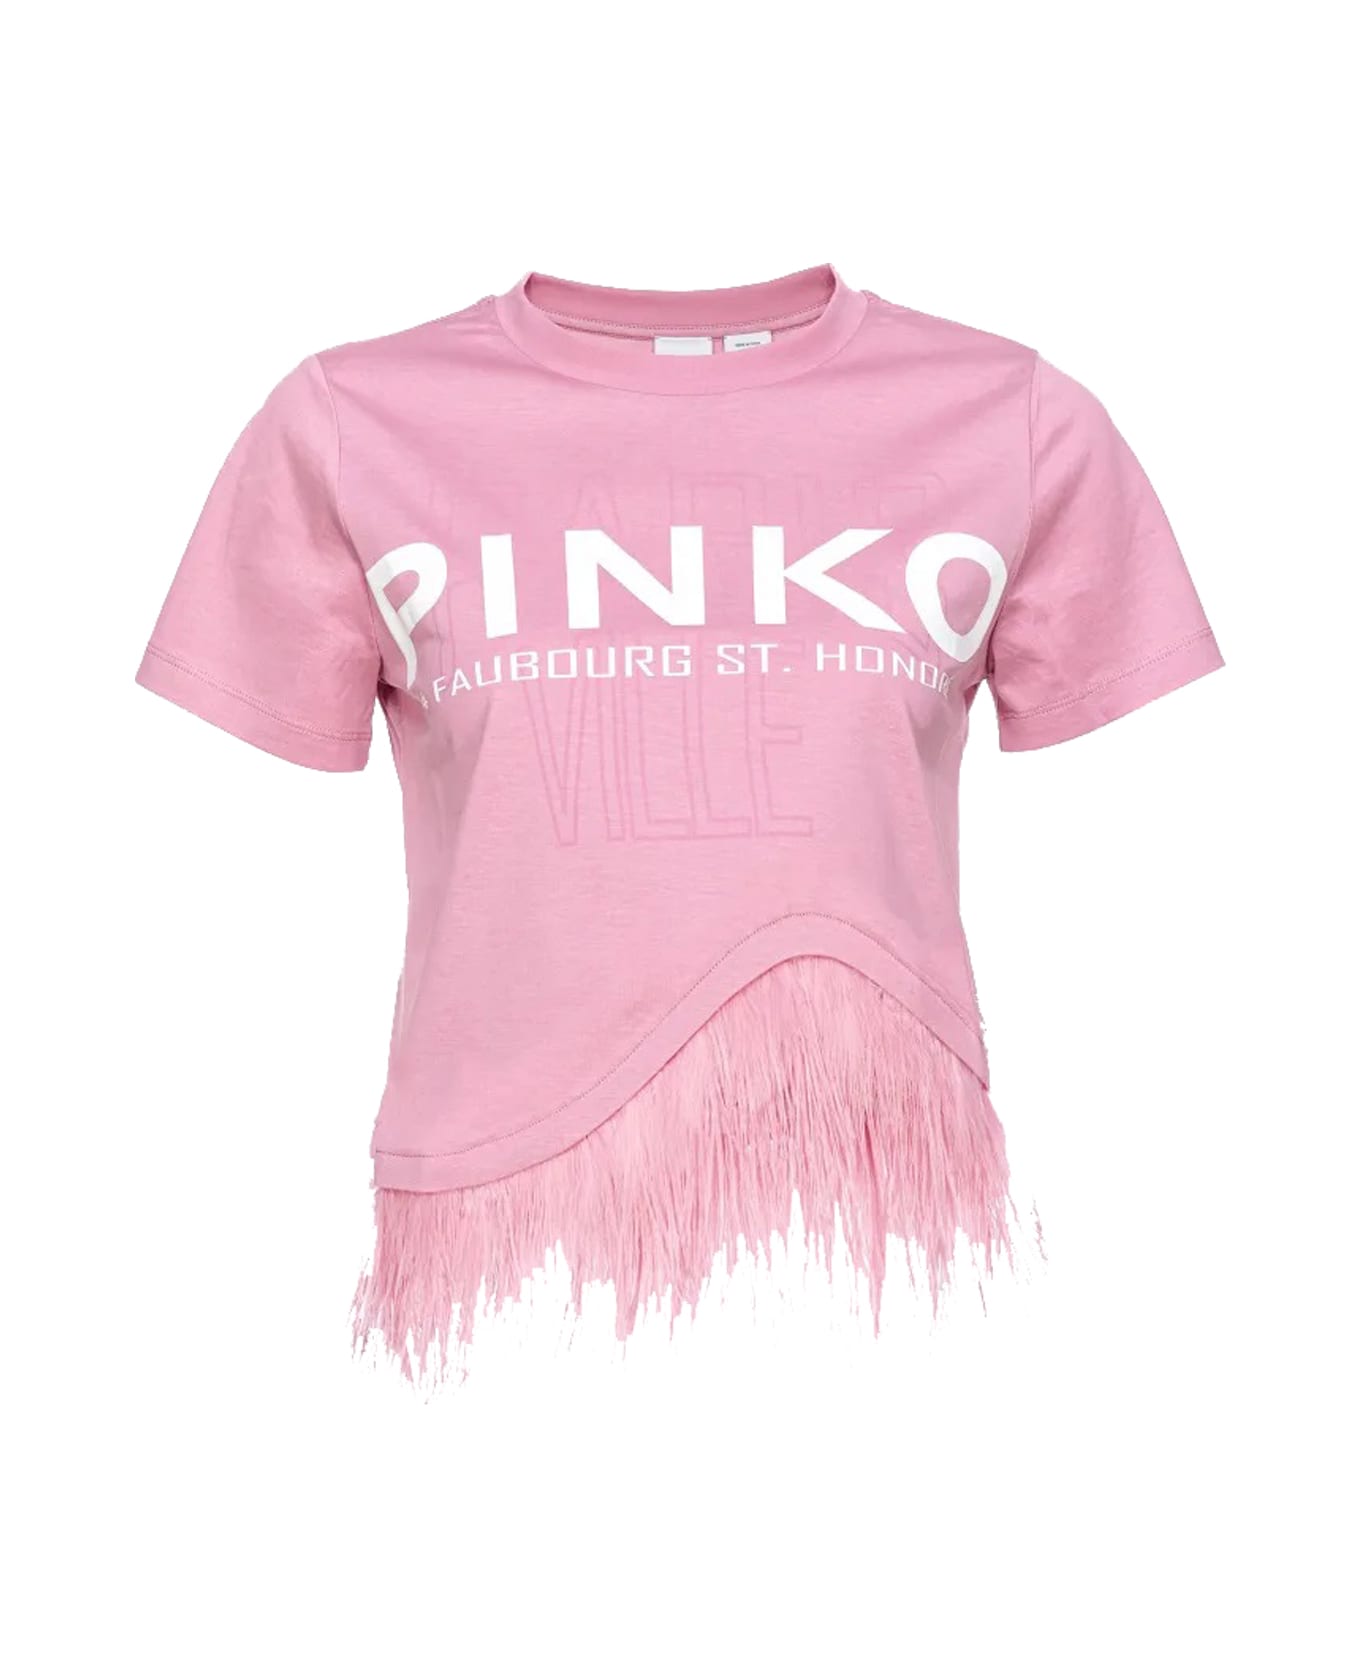 Pinko Cities Logo Printed Asymmetric T-shirt - Rose